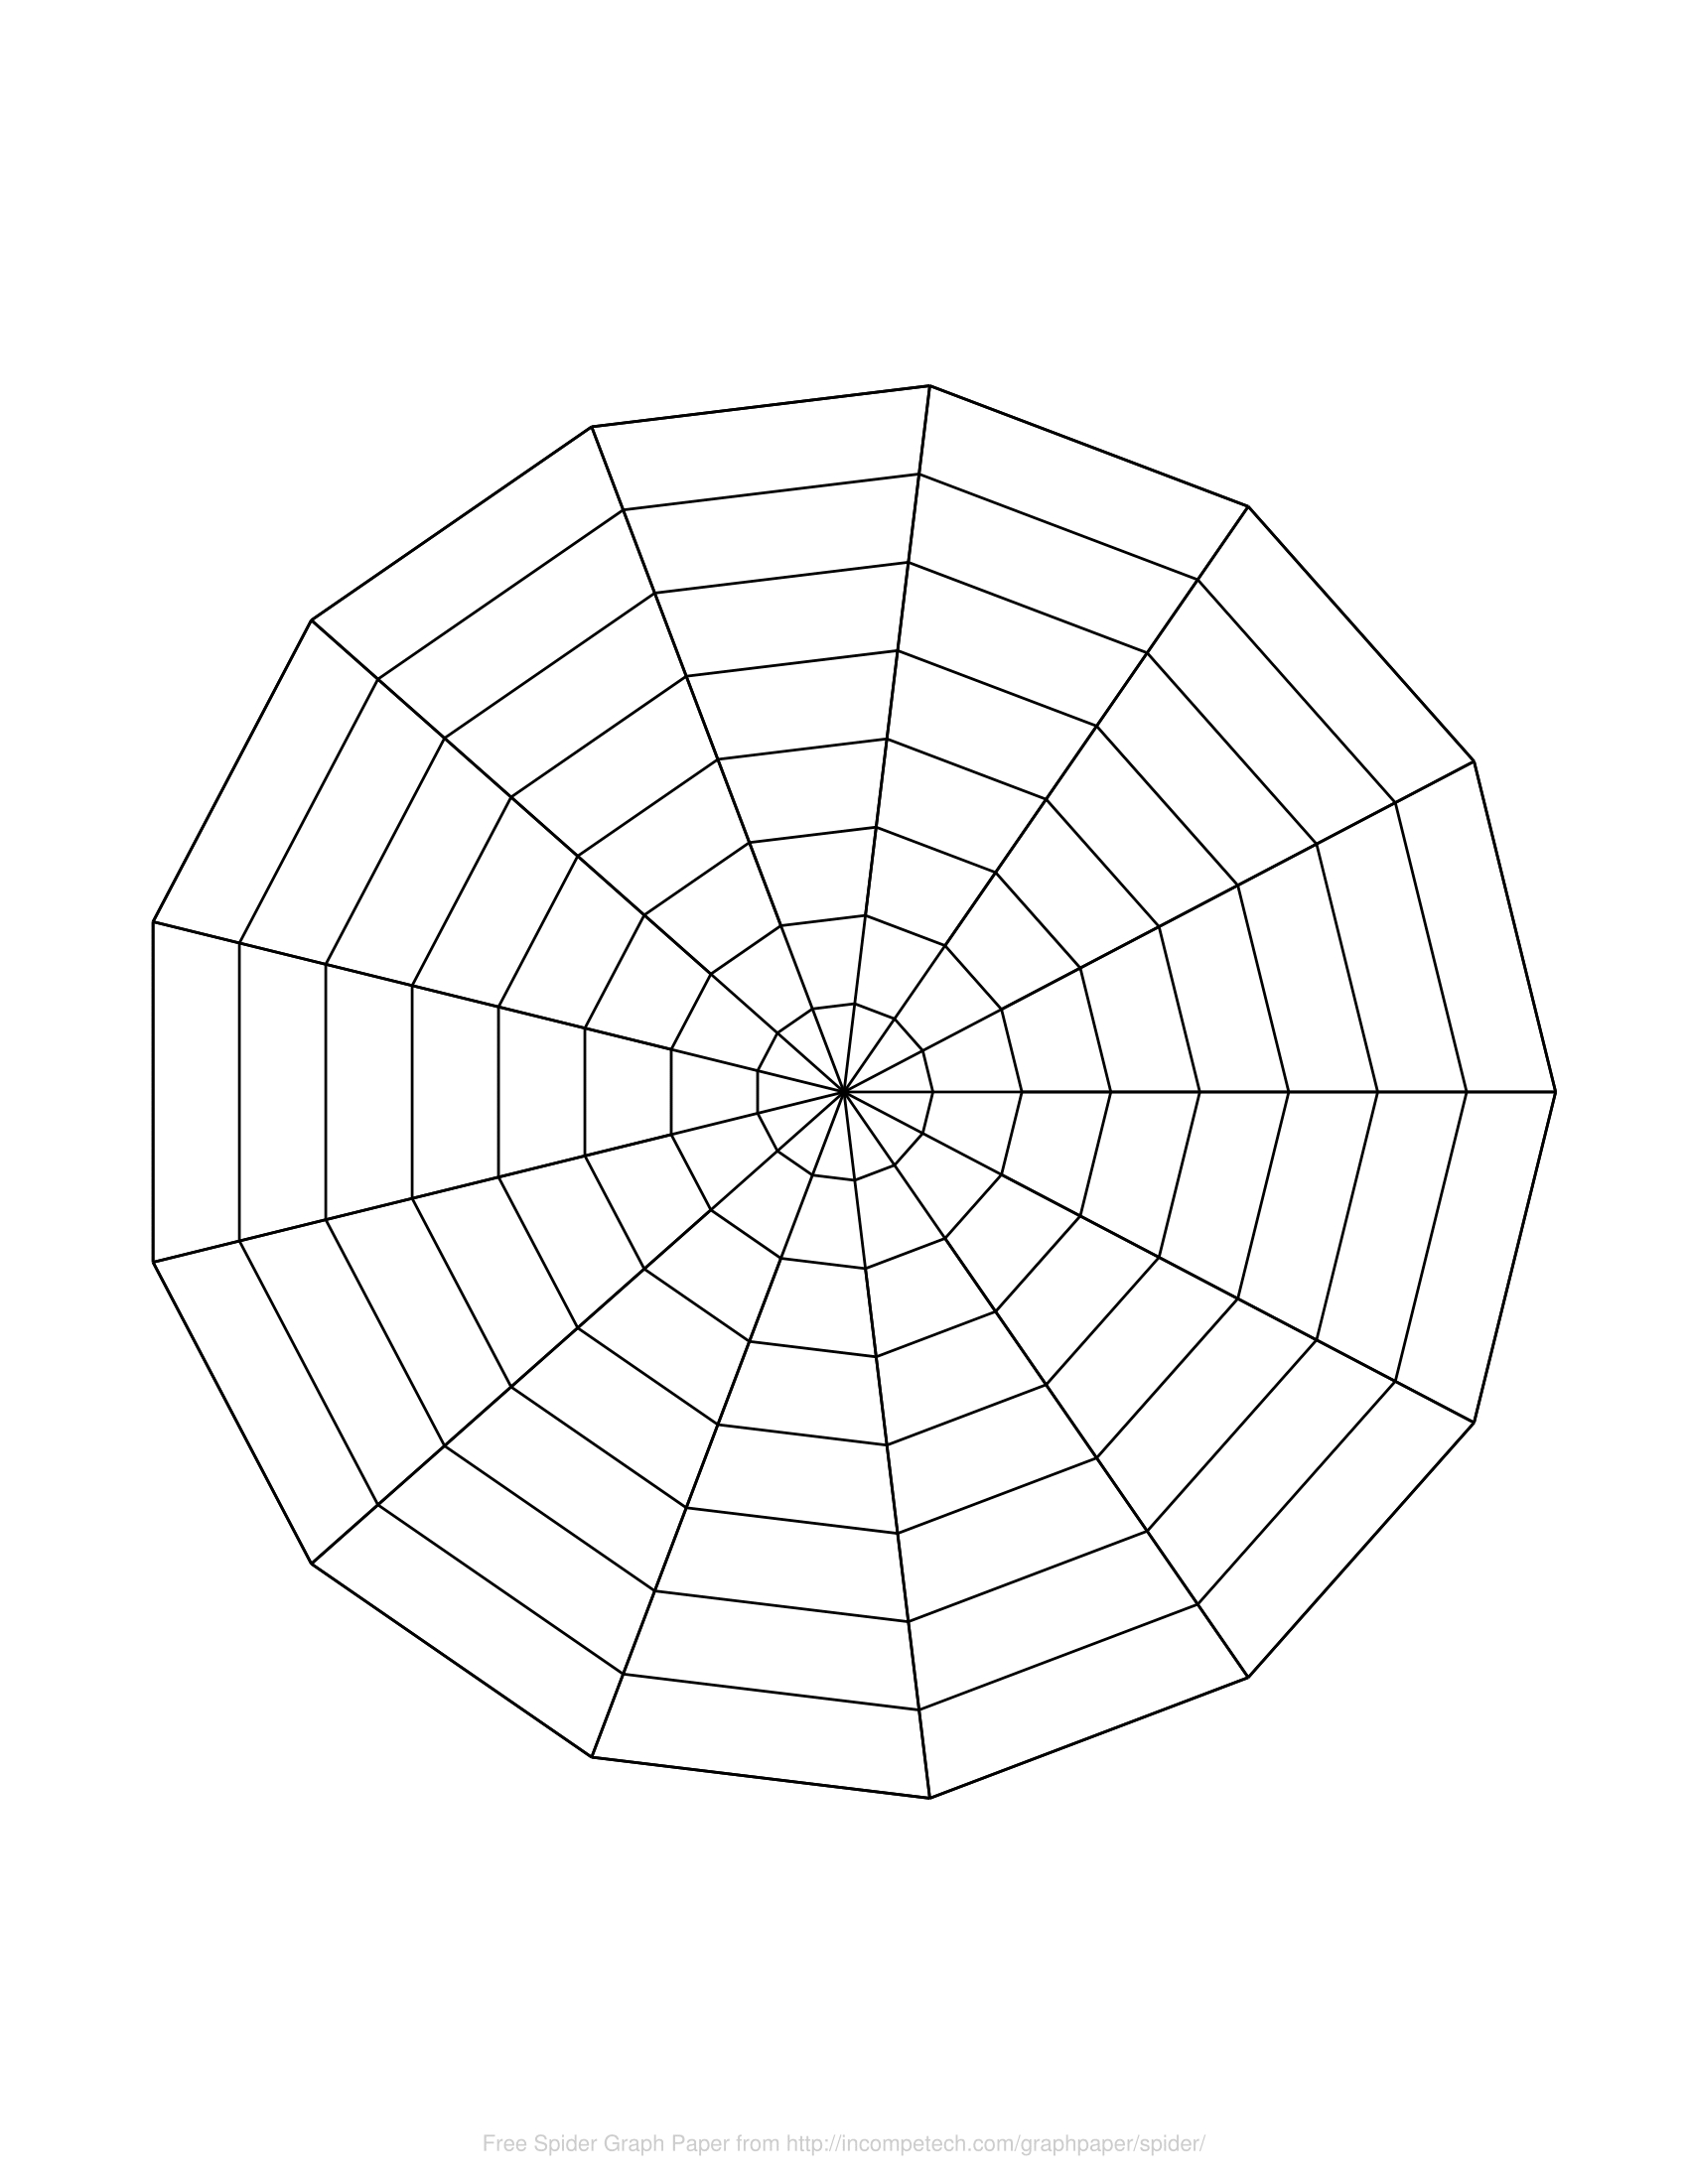 Free Online Graph Paper / Spider Throughout Blank Radar Chart Template